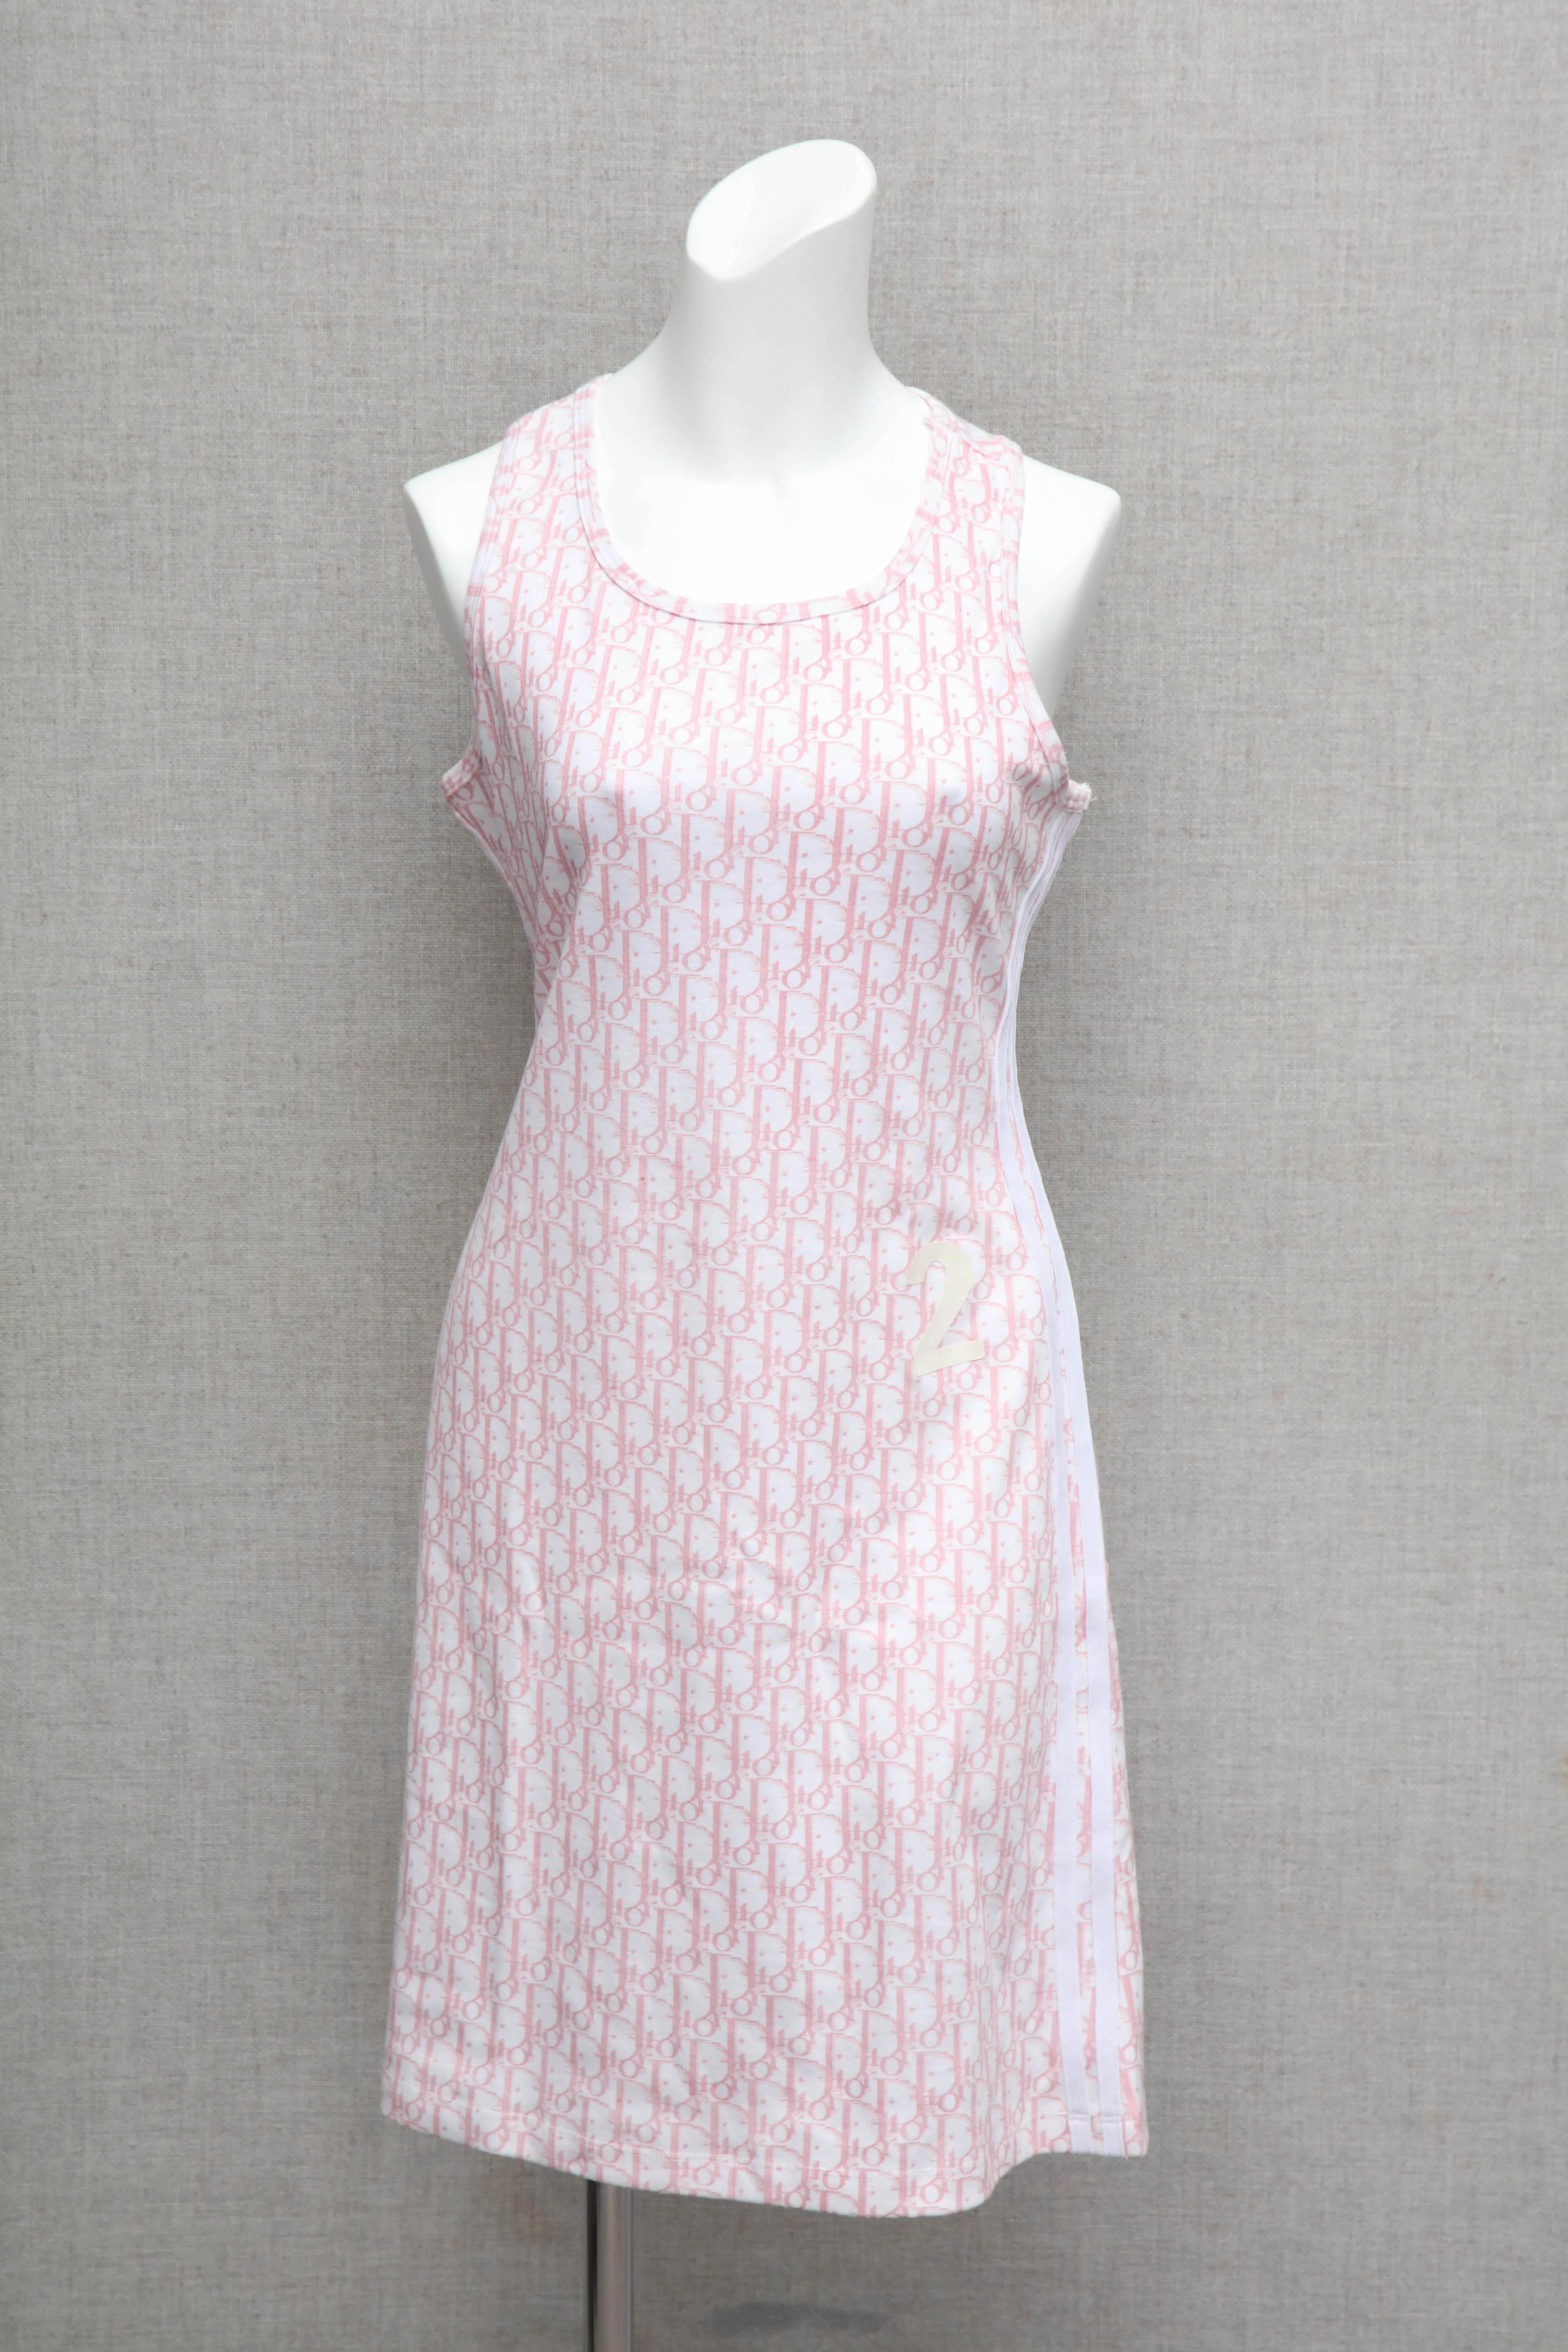 John Galliano for Christian Dior Pink Trotter Logo Dress
FR Size: 42